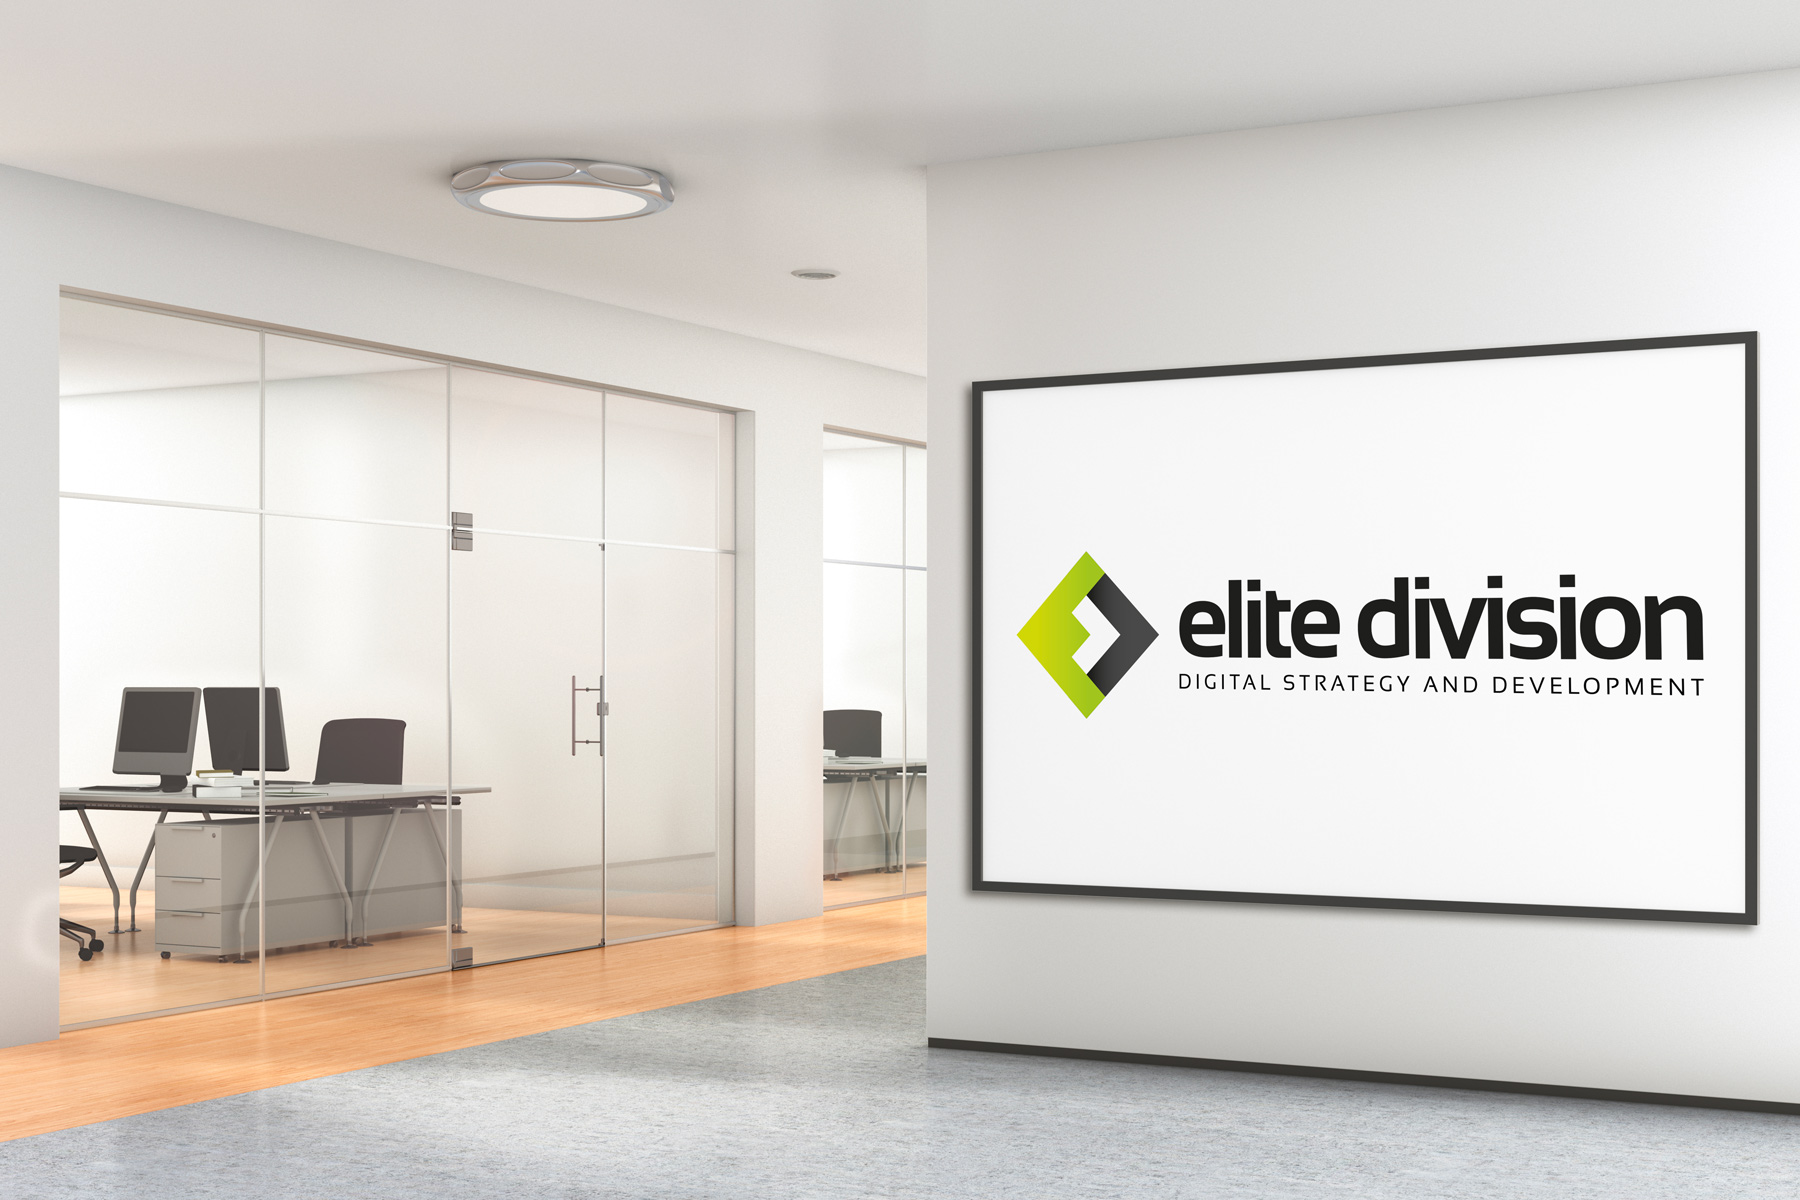 Featured image for “Rebranding Elite Division”